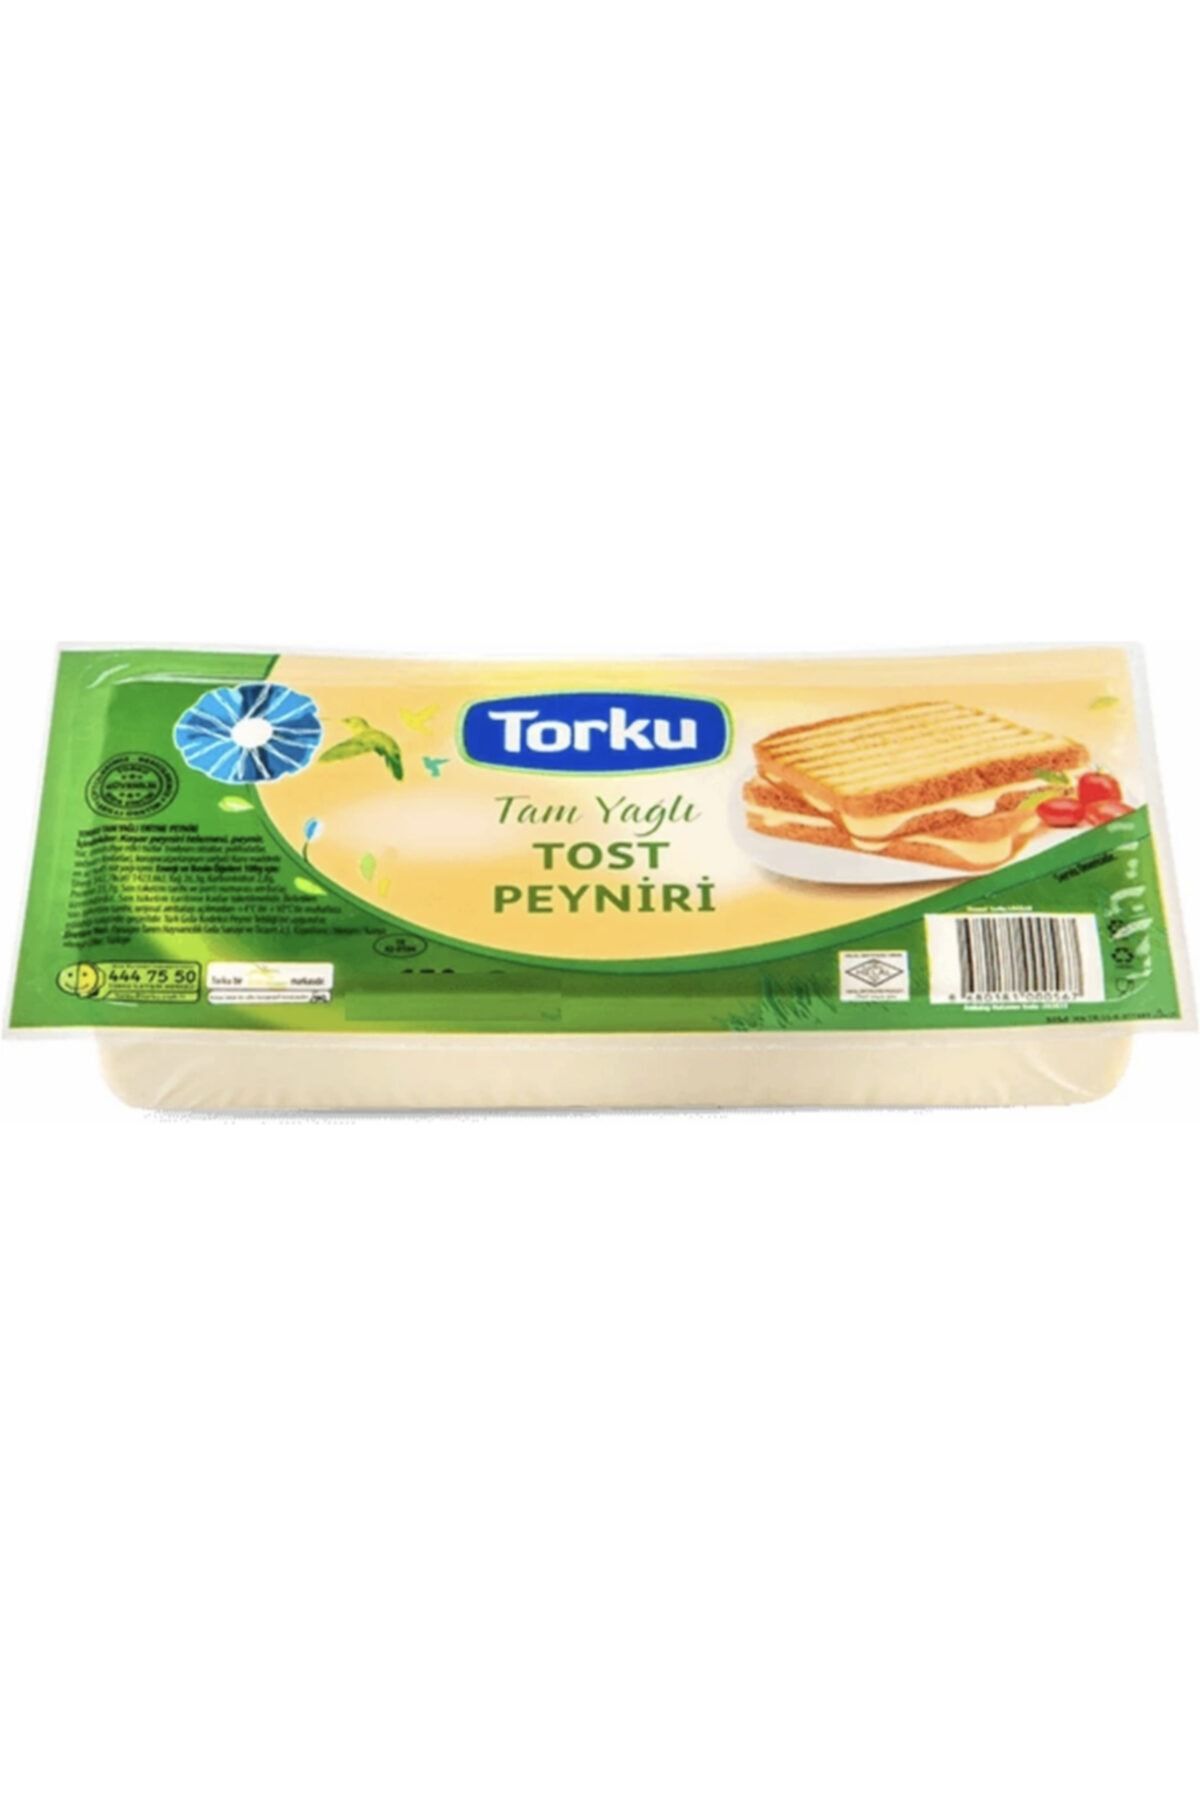 Torku Tam Yağlı Tost Peyniri 600gr